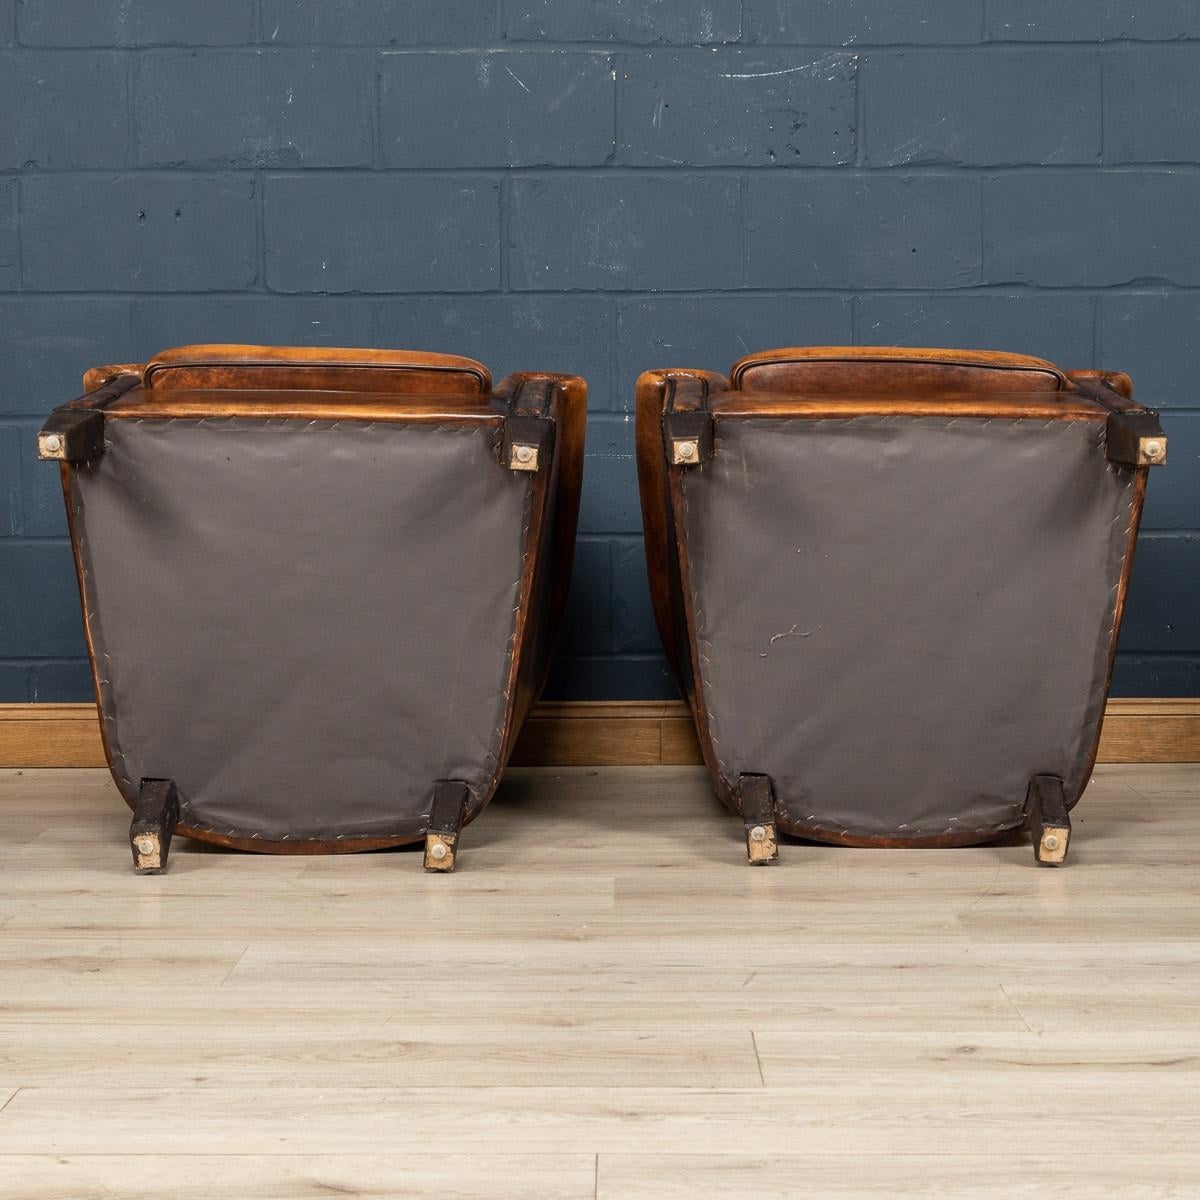 20th Century Dutch Sheepskin Leather Tub Chairs 4